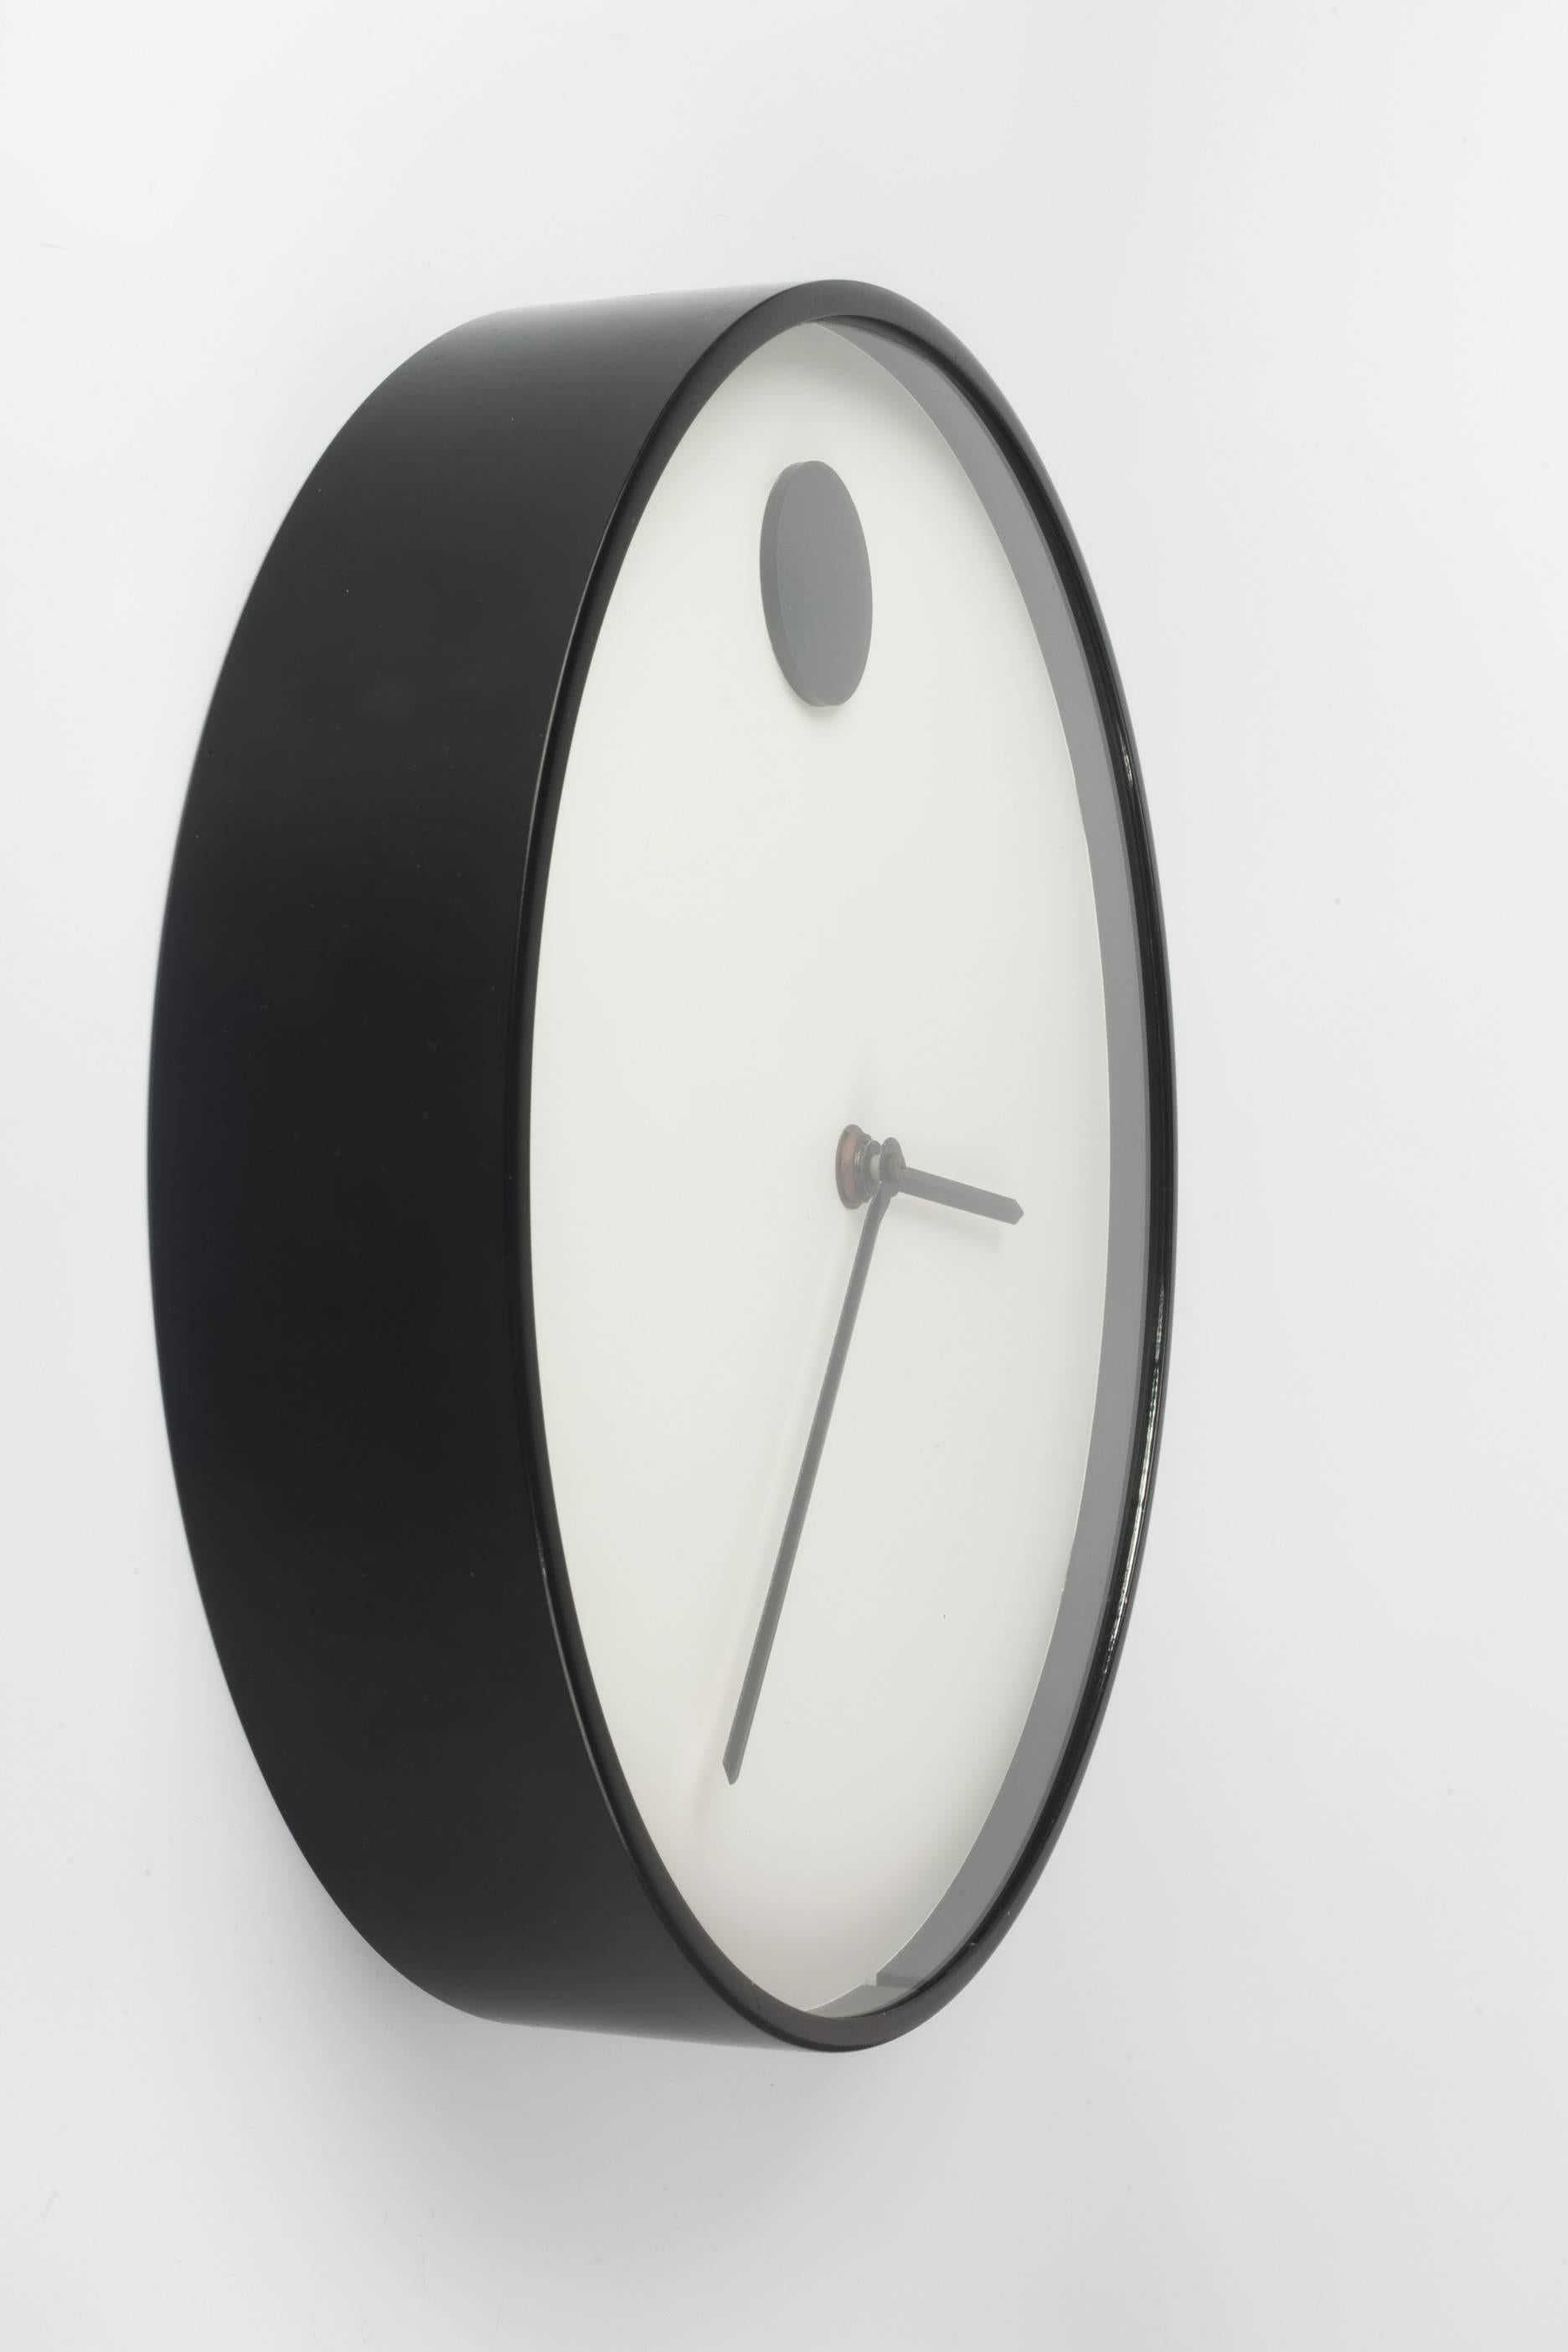 Late 20th Century Wall Clock by George Horwitt for Howard Miller, White, Black Frame, 1970